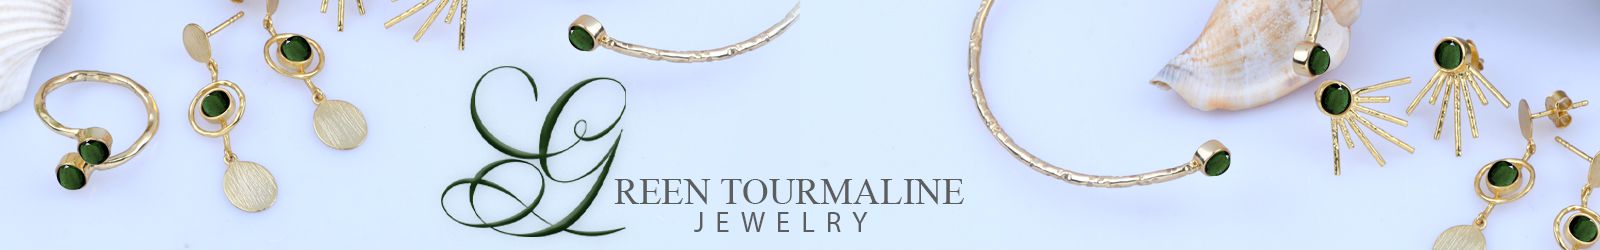 Silver Green Tourmaline Jewelry Wholesale Supplier